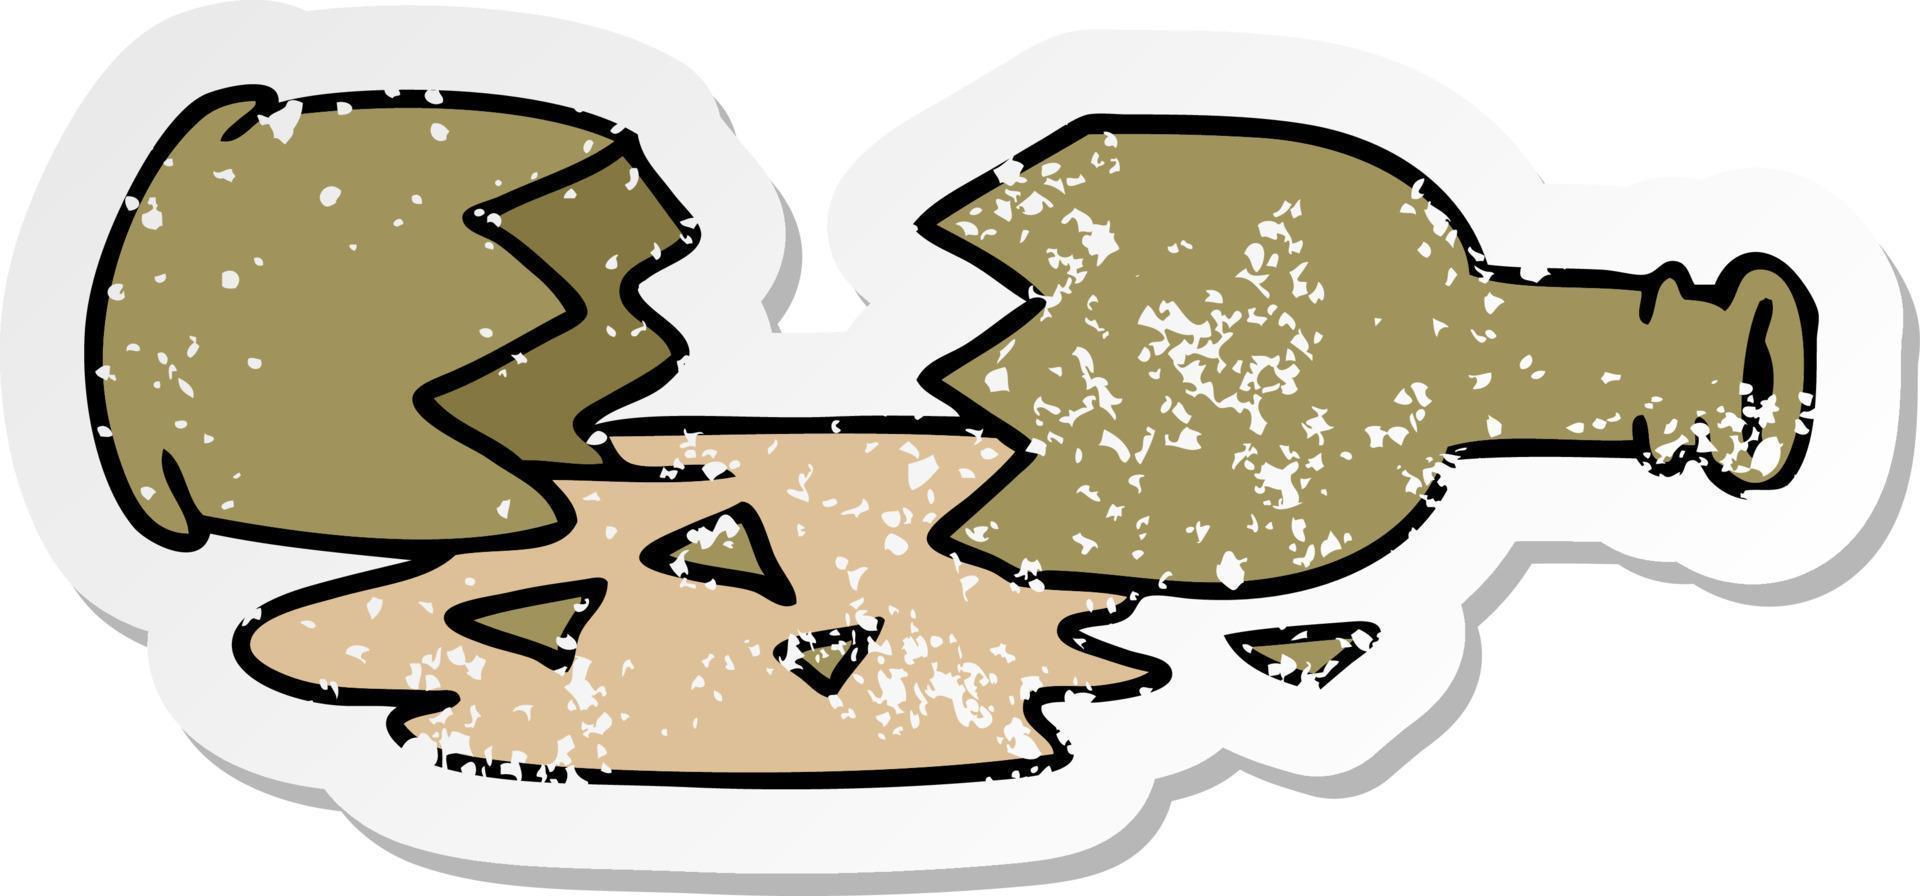 distressed sticker cartoon doodle of a broken bottle vector